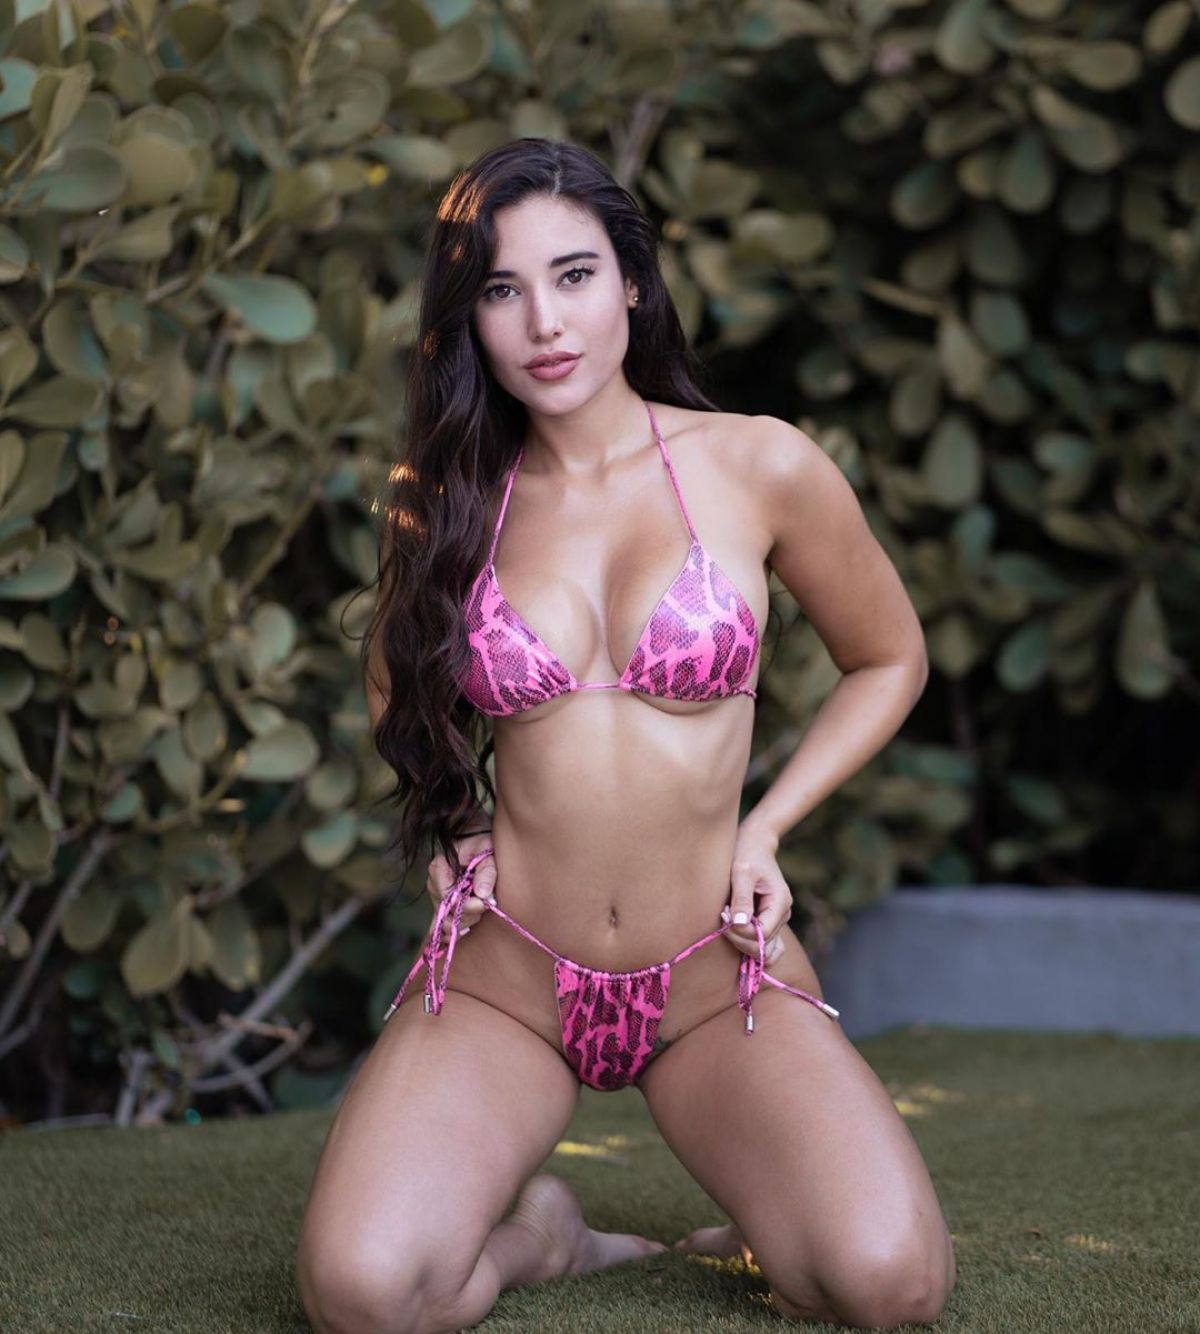 ANGIE VARONA in Bikini - Instagram Photos 05/17/2020.